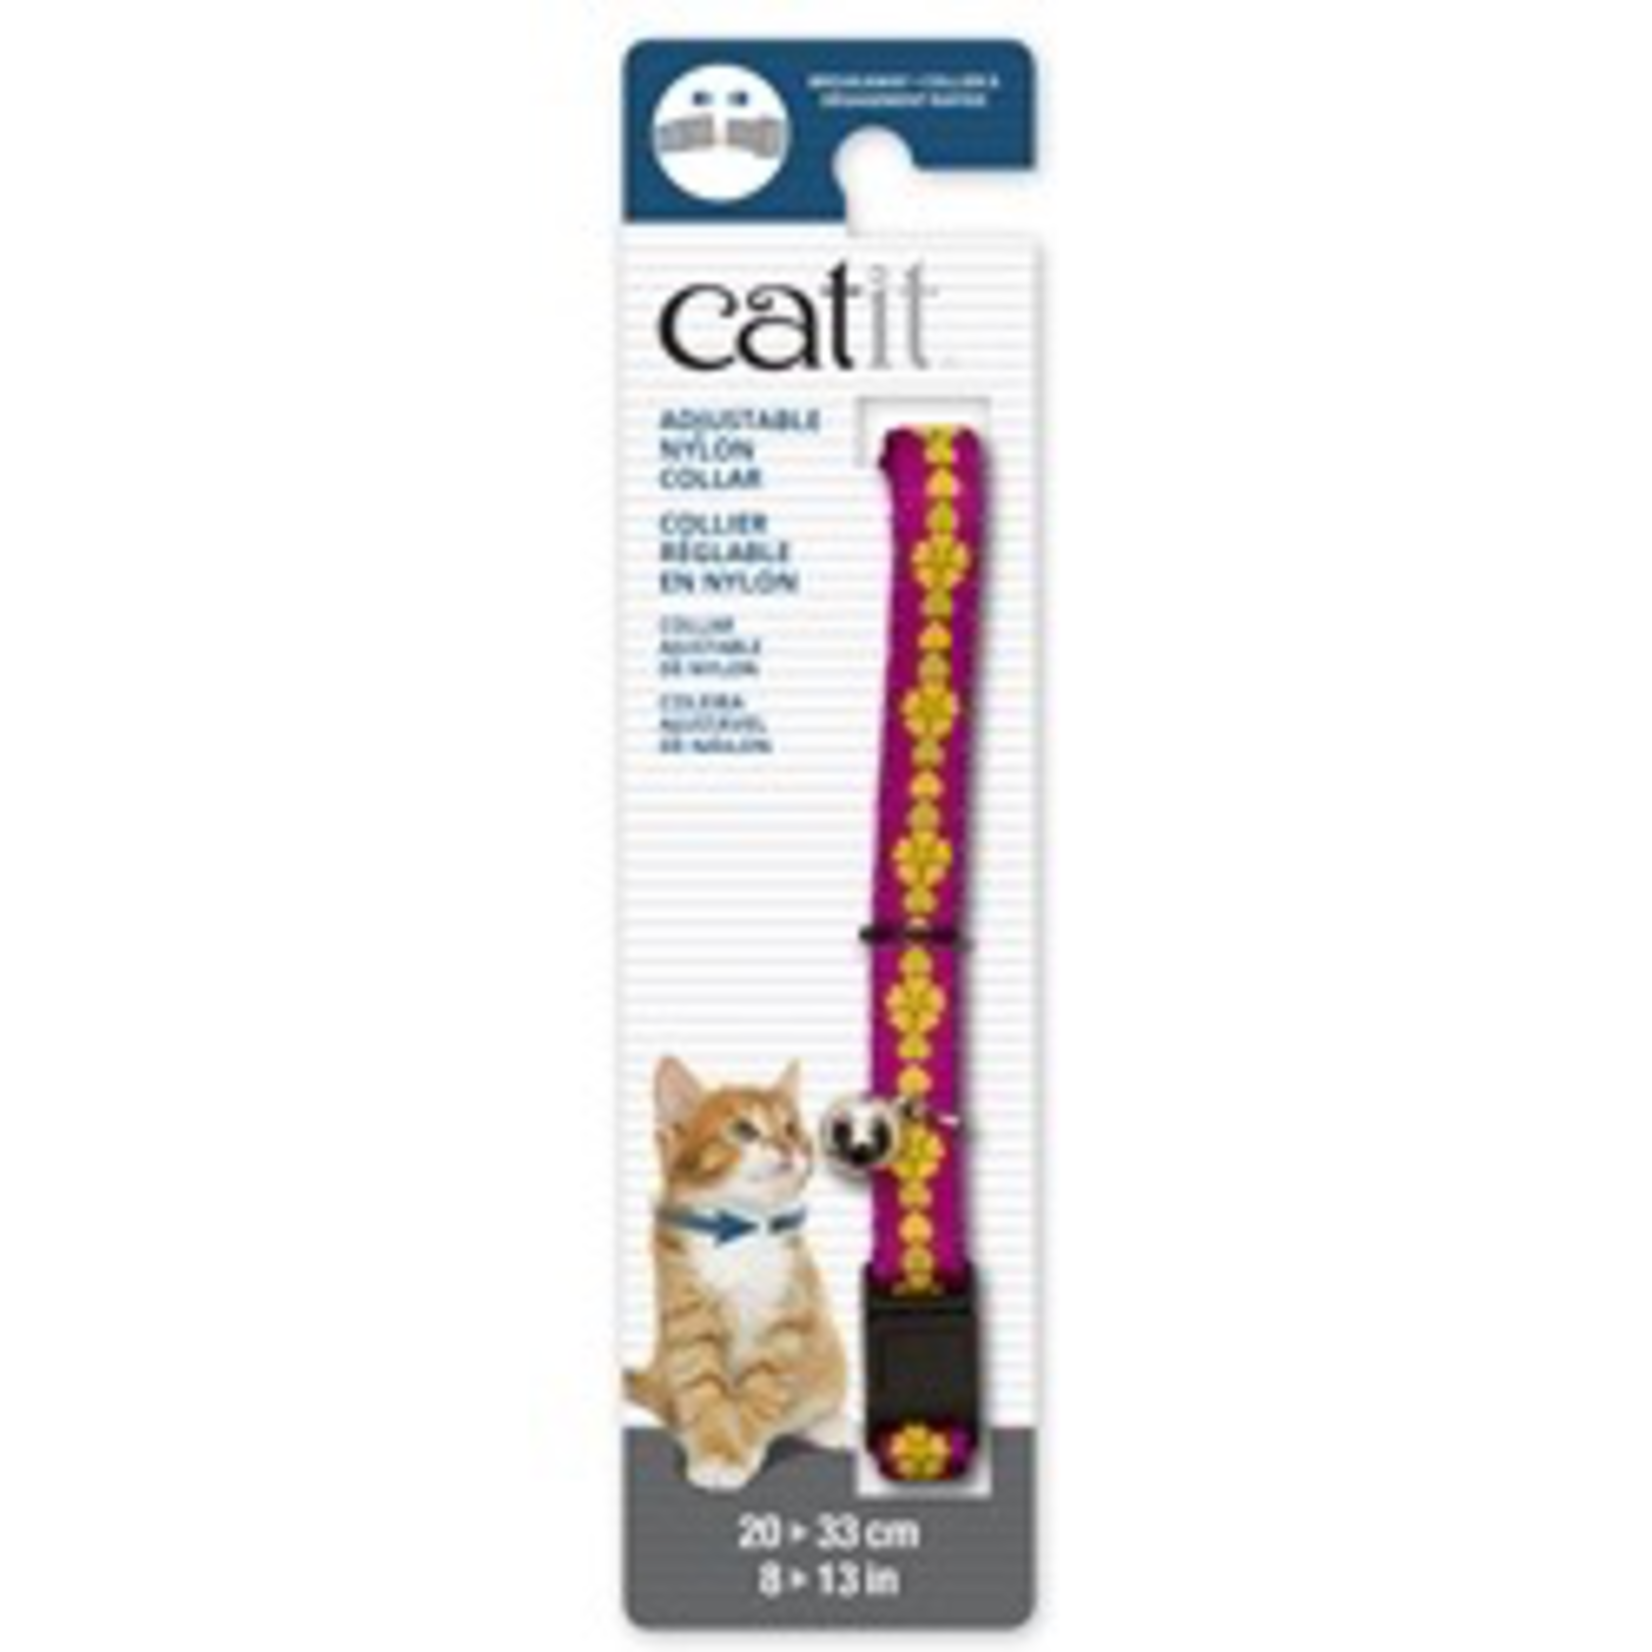 CAT IT Catit Adjustable Breakaway Nylon Collar - Pink with Flowers - 20-33 cm (8-13 in)